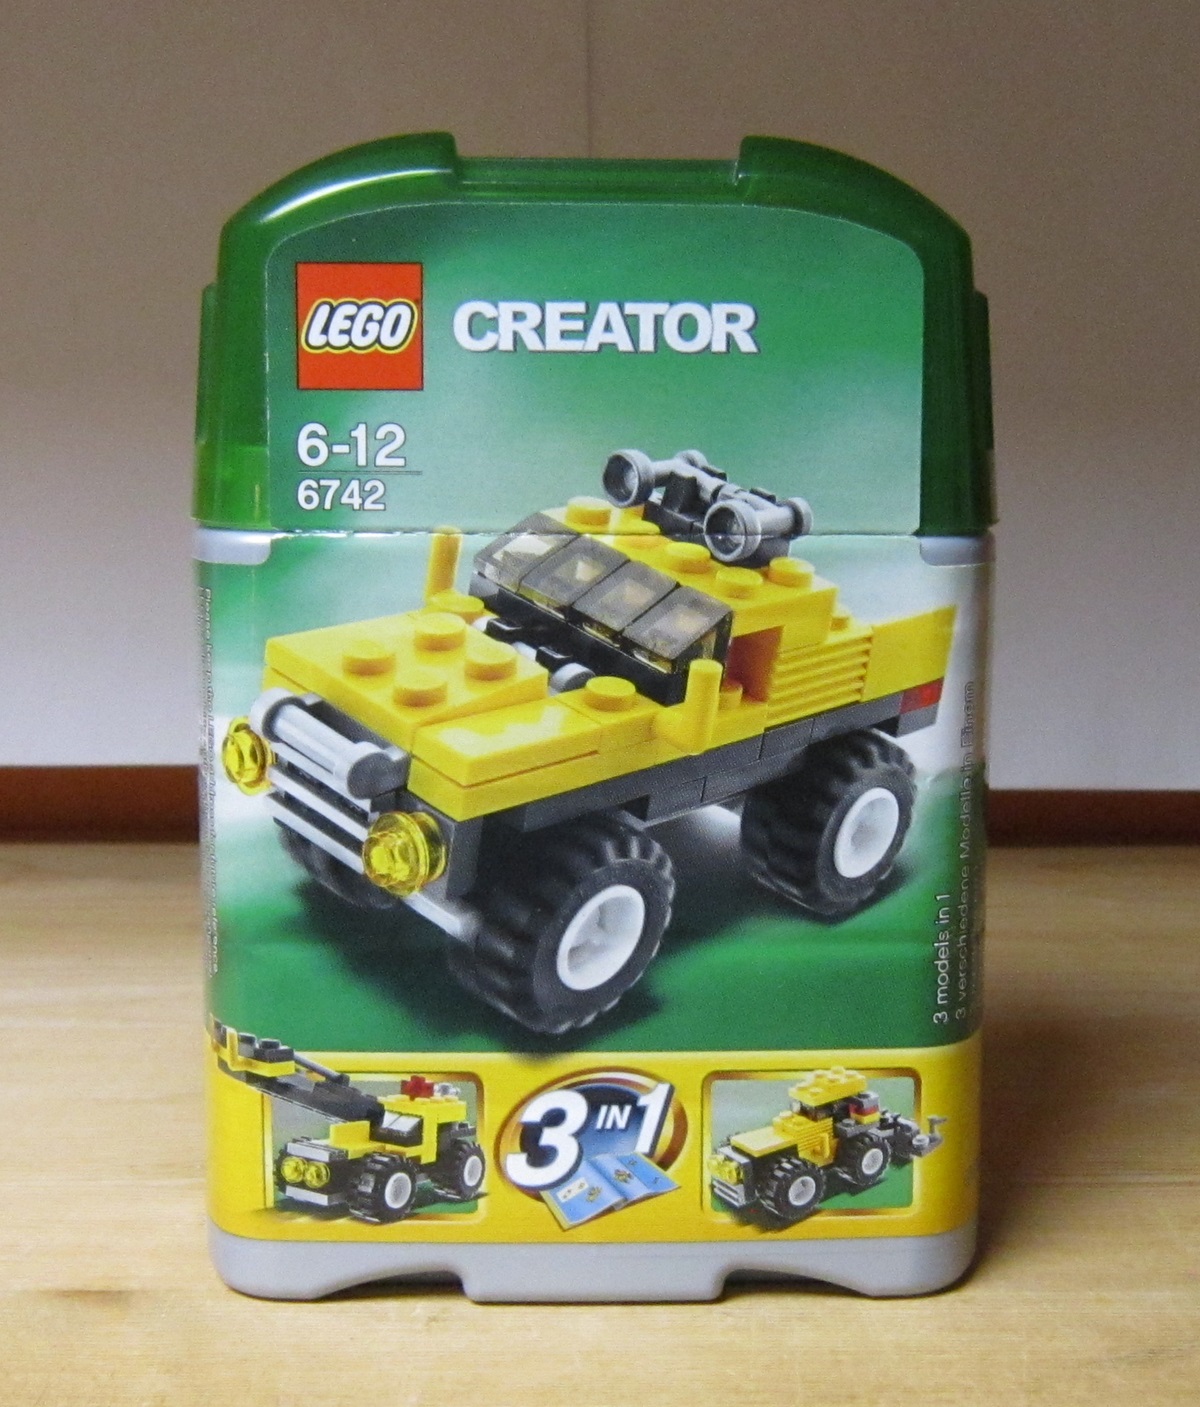 0050 Lego creator 6742